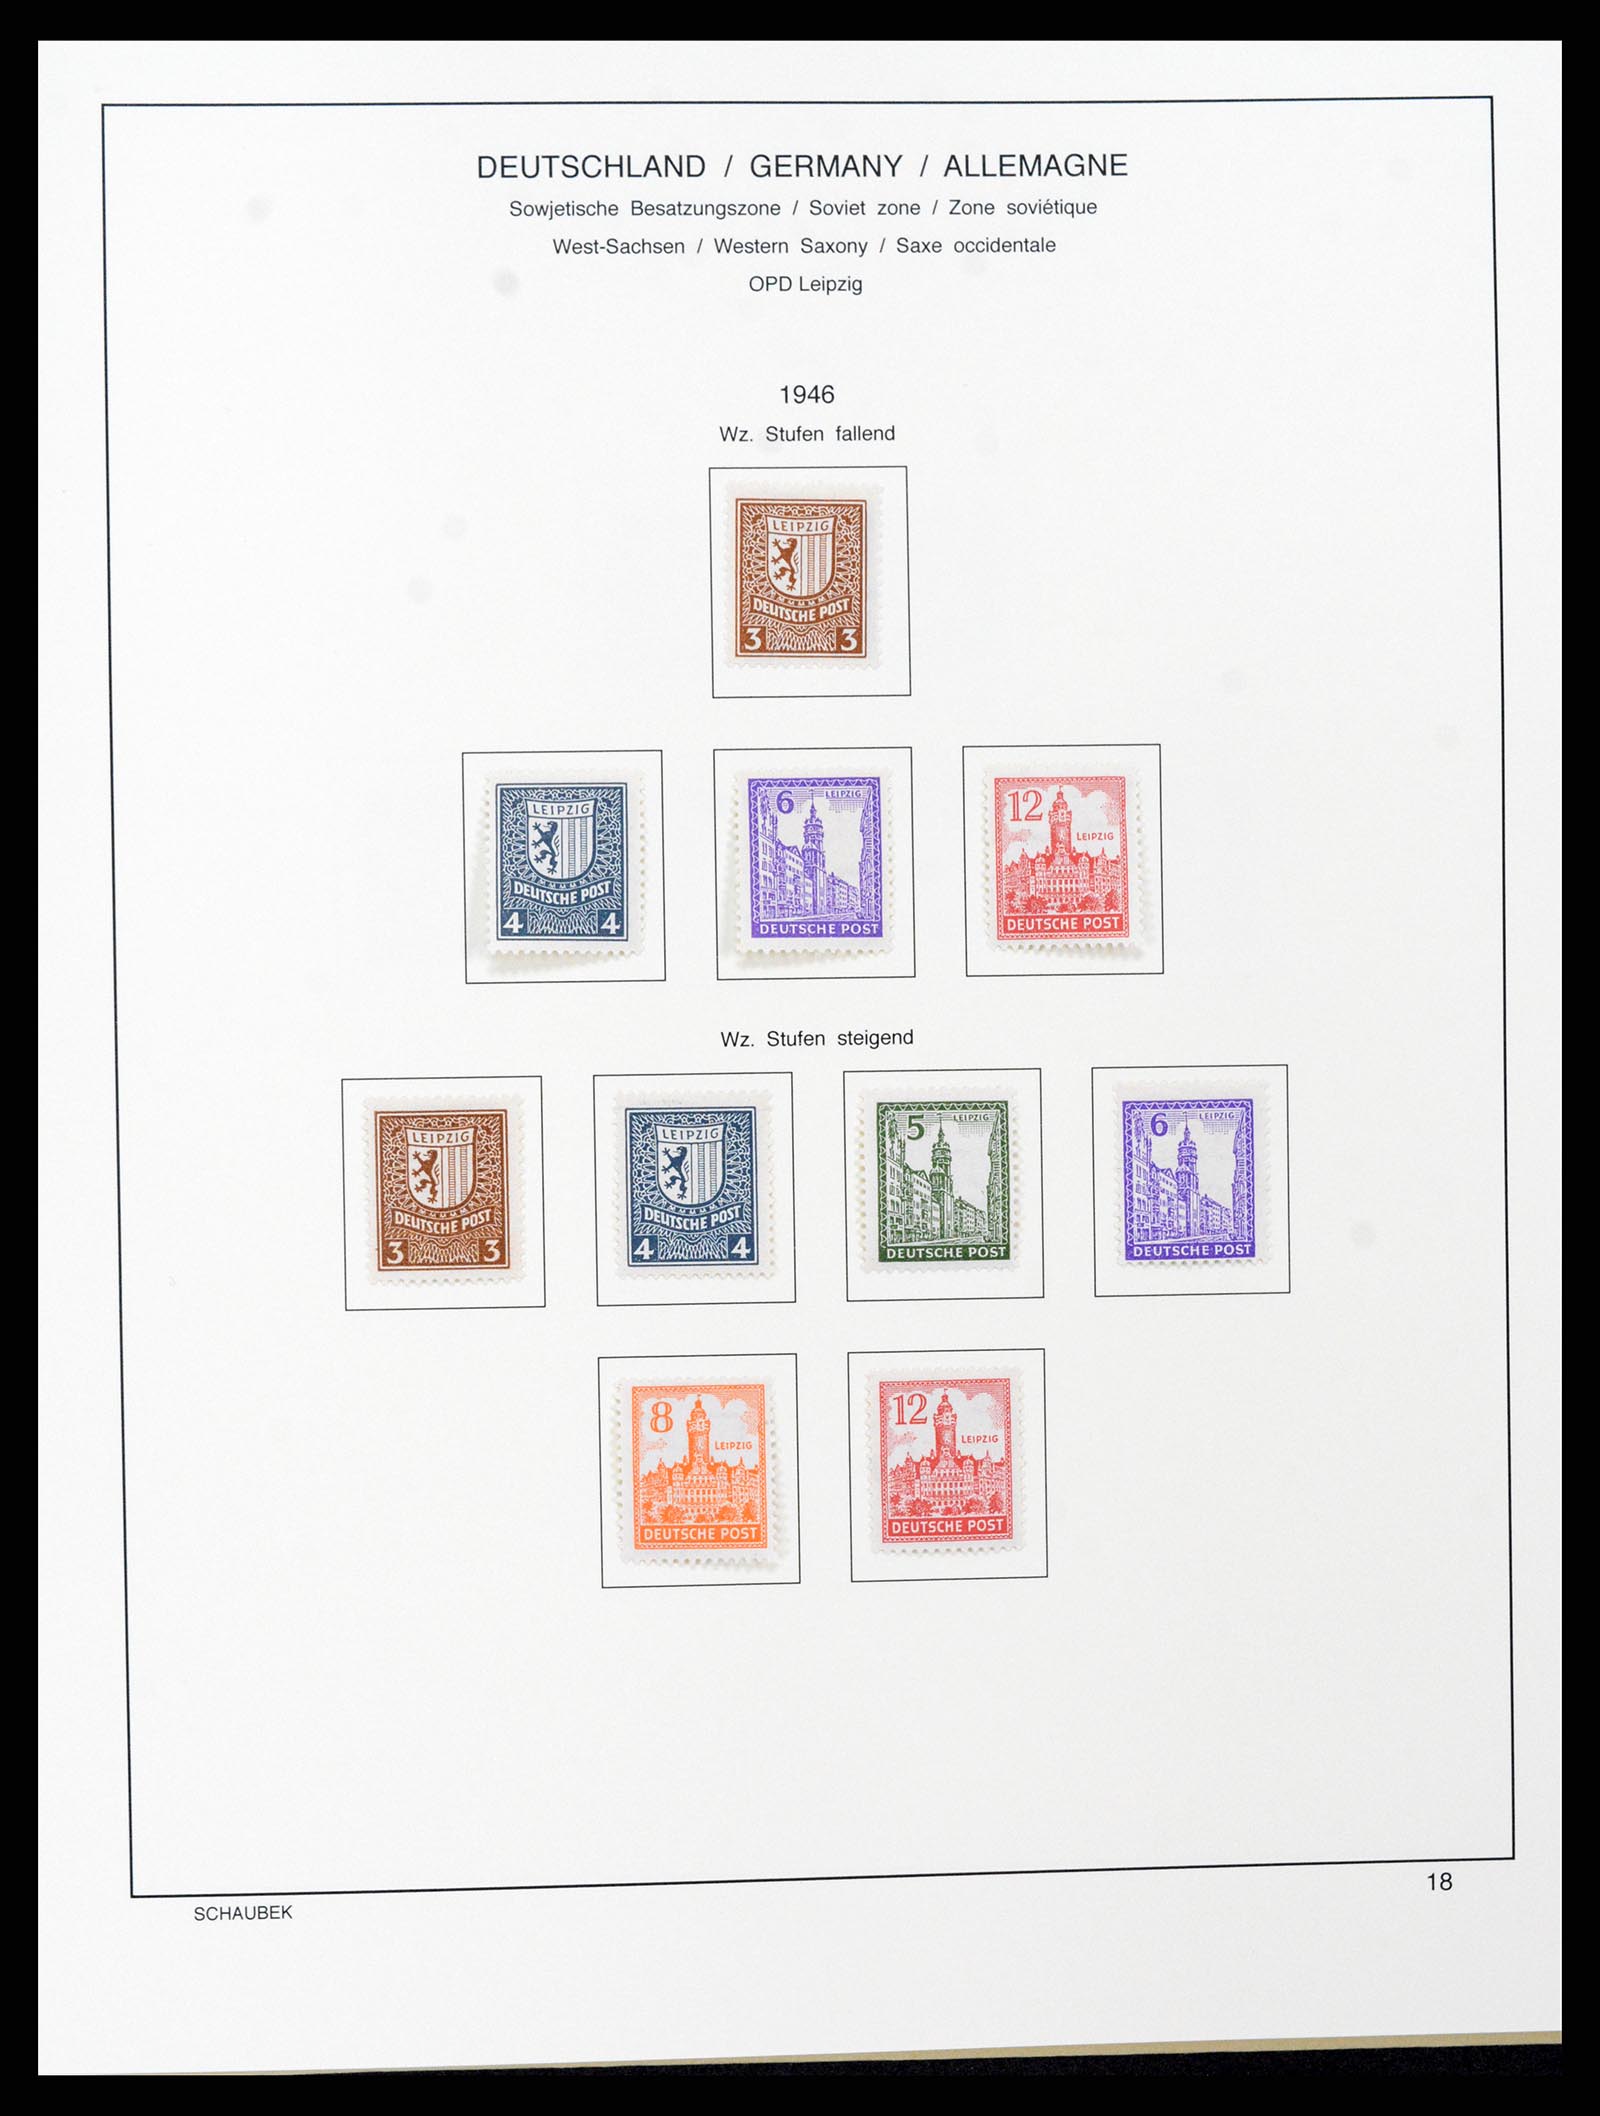 37645 042 - Stamp collection 37645 German Zones 1945-1949.